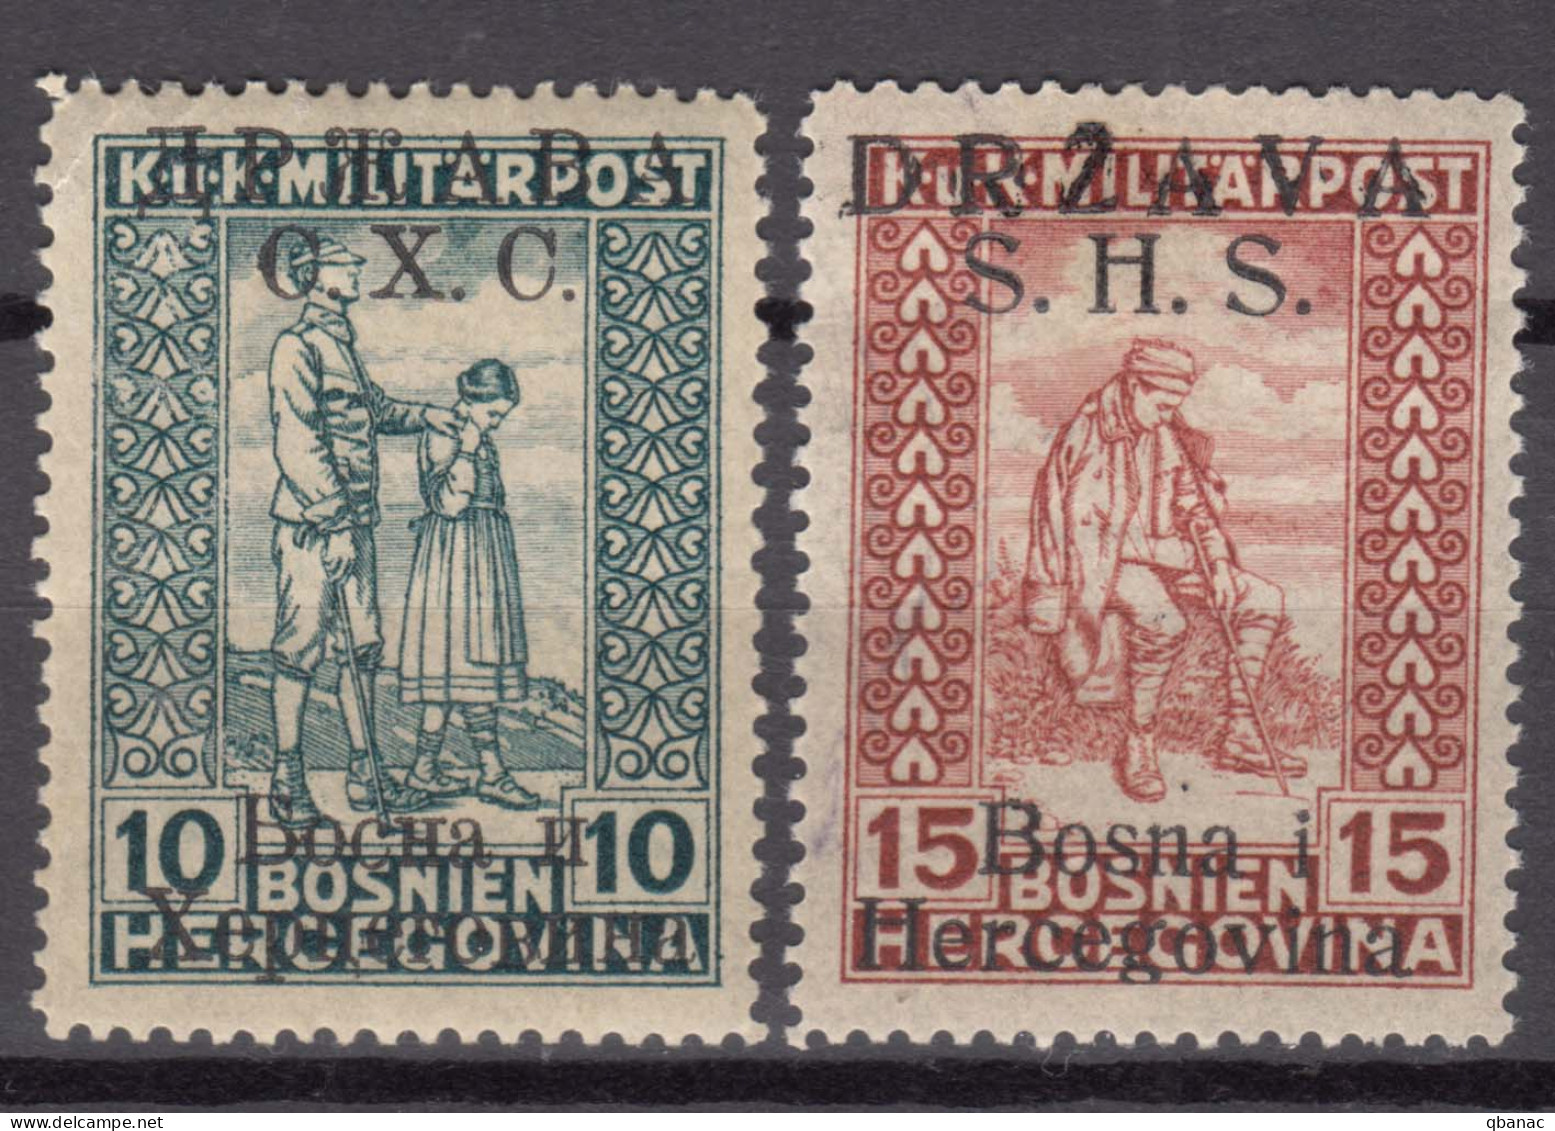 Yugoslavia Kingdom SHS, Issues For Bosnia 1918 Mi#19 II And 20 I Mint Hinged - Ungebraucht